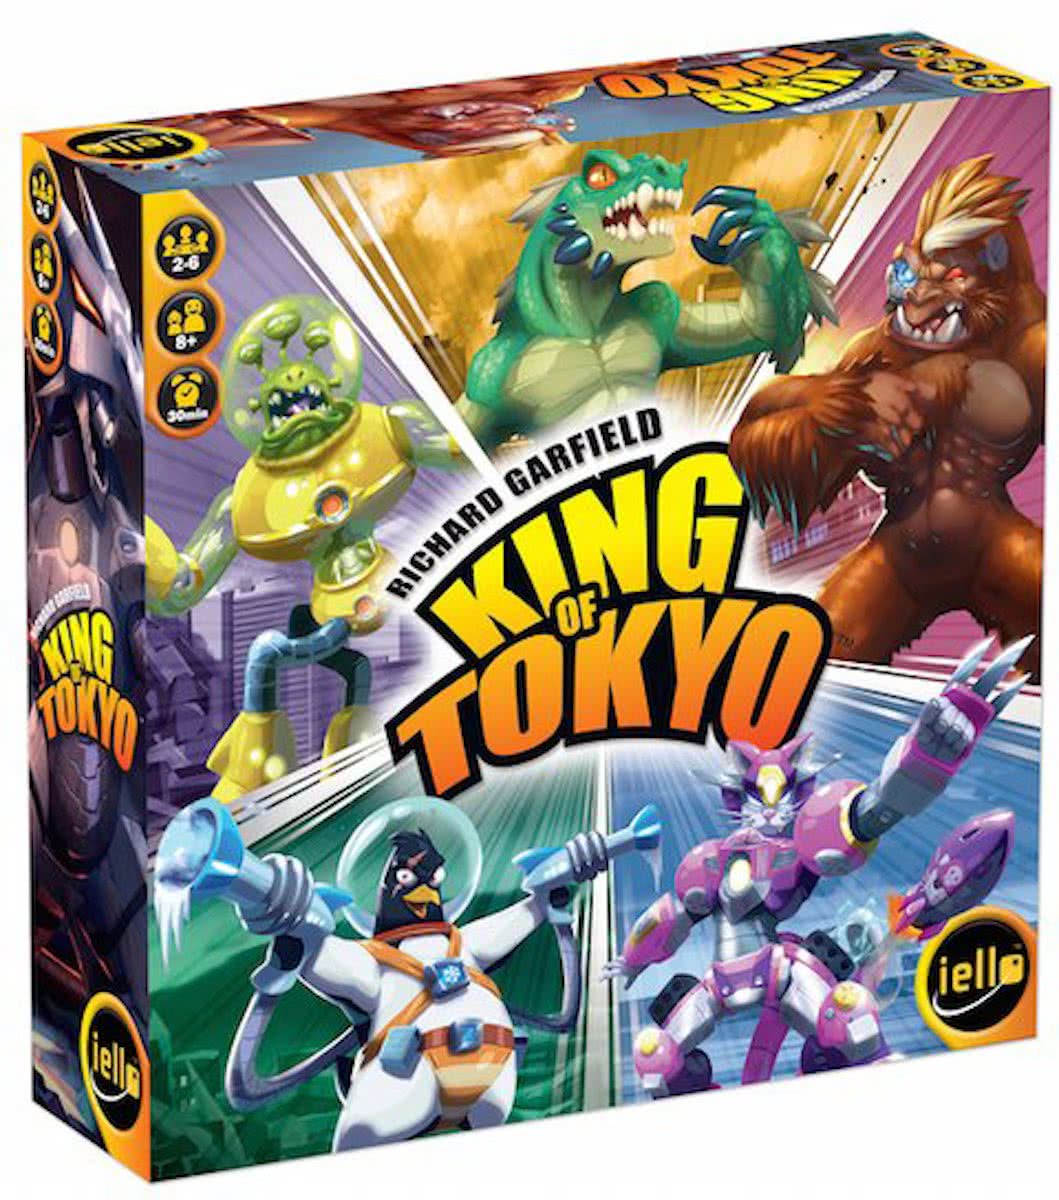 King of Tokyo description reviews